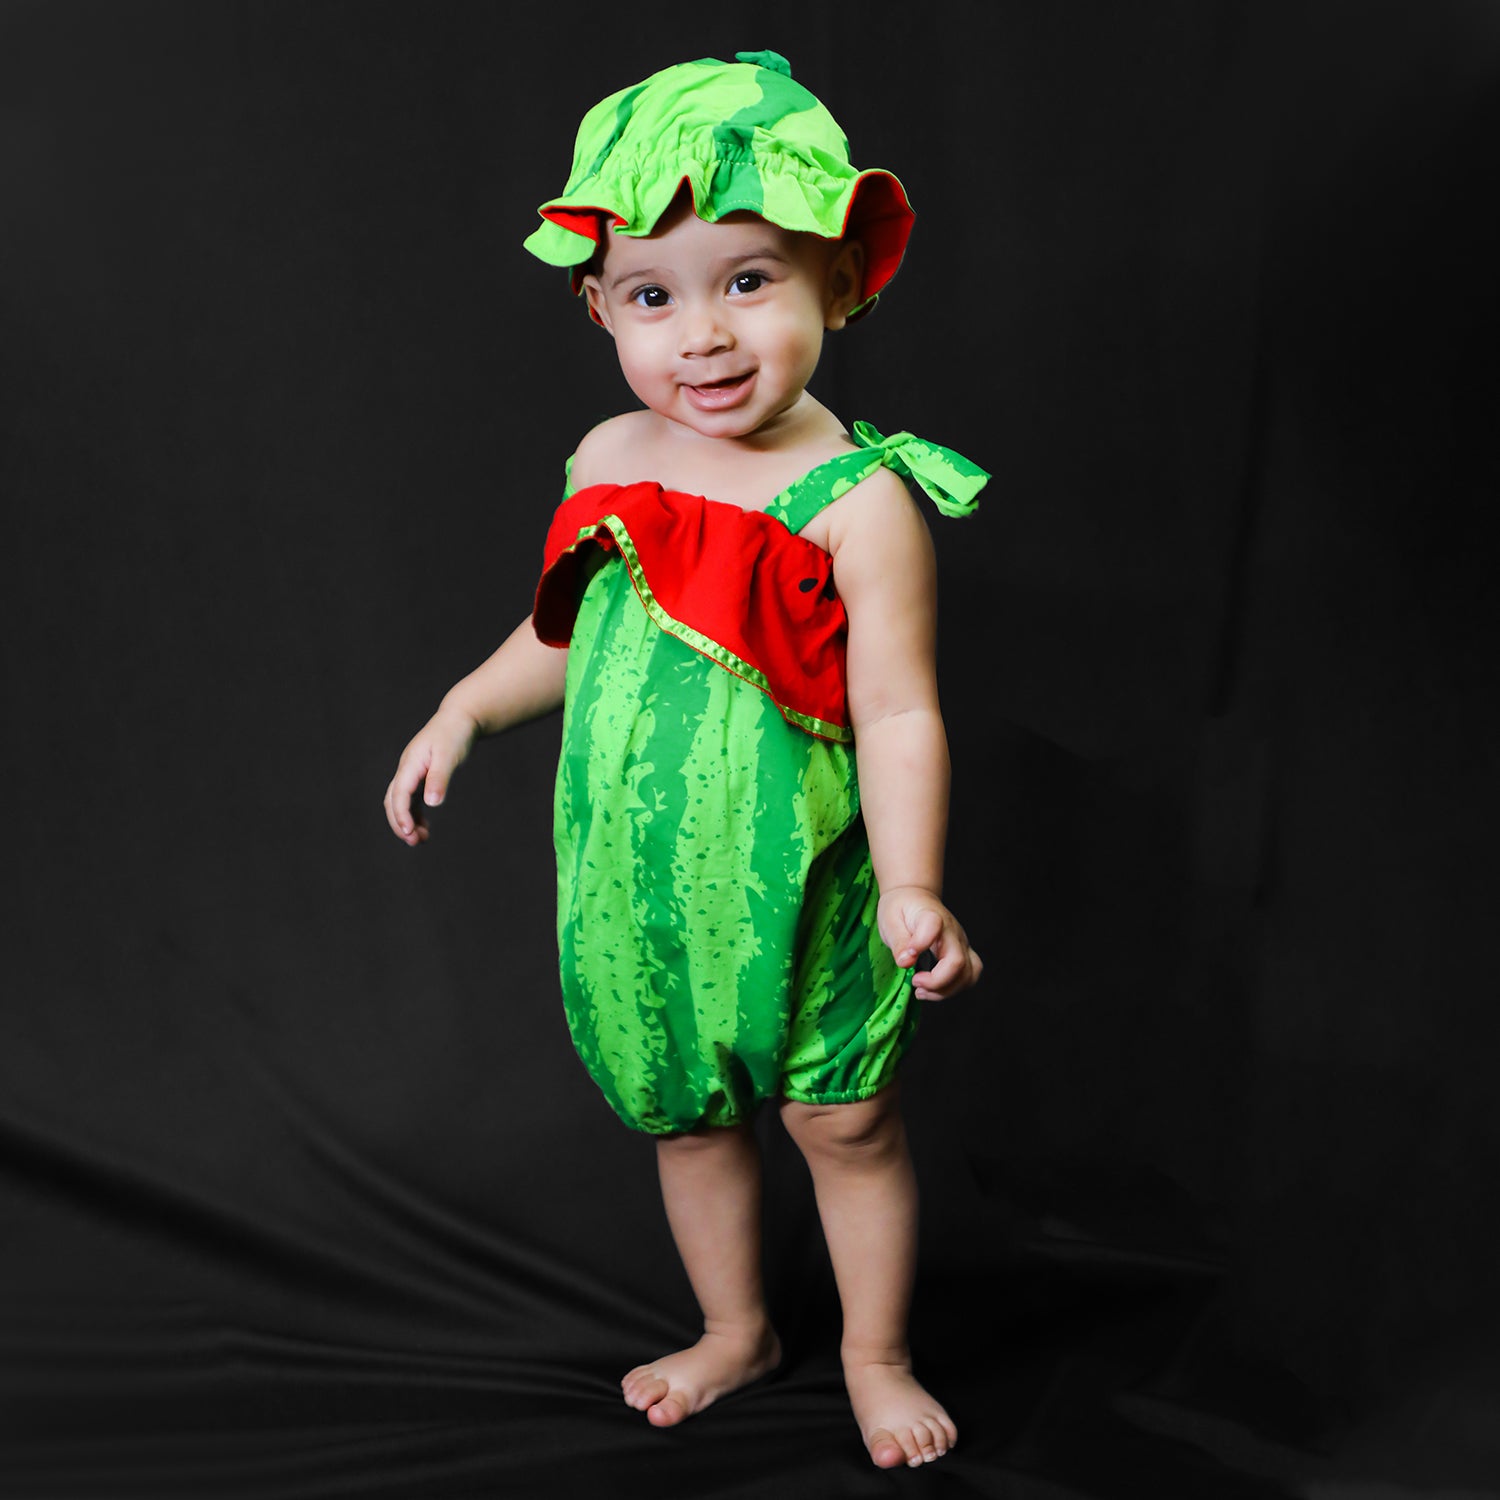 Baby Moo Watermelon Costume Cocomelon Theme Fancy Dress - Green - Baby Moo